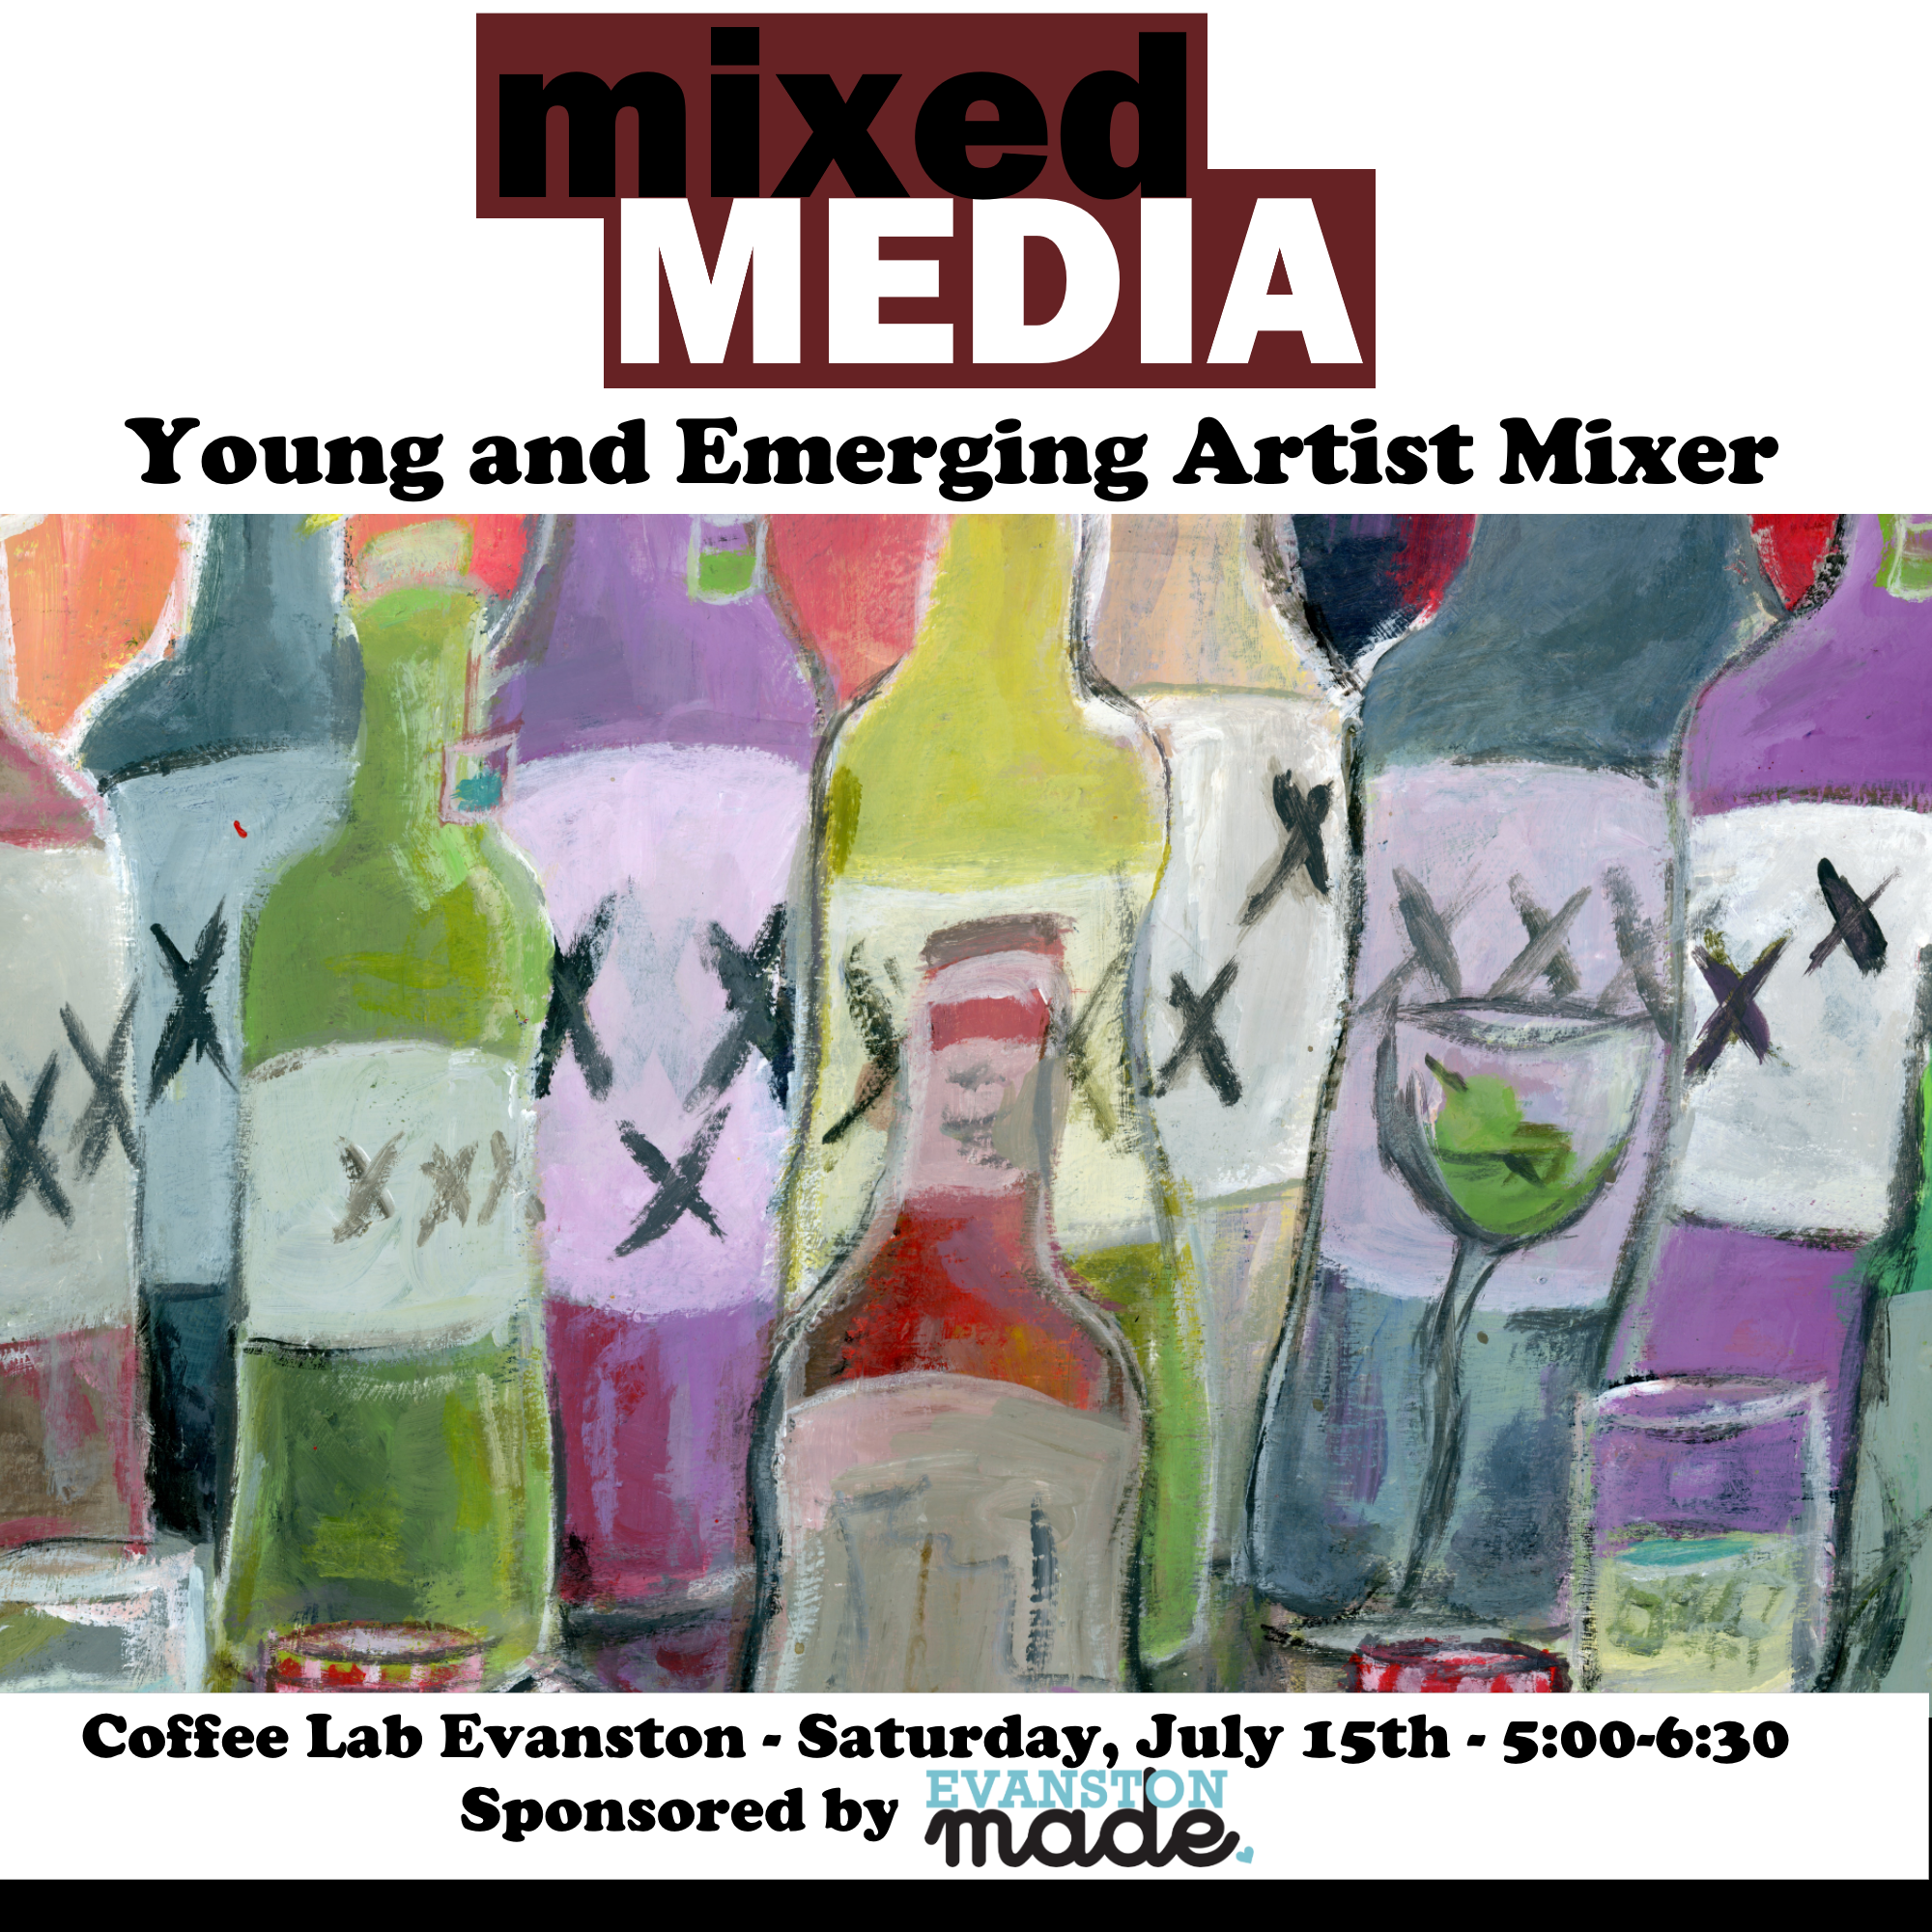 Mixed Media: Young and Emerging Artist Mixer